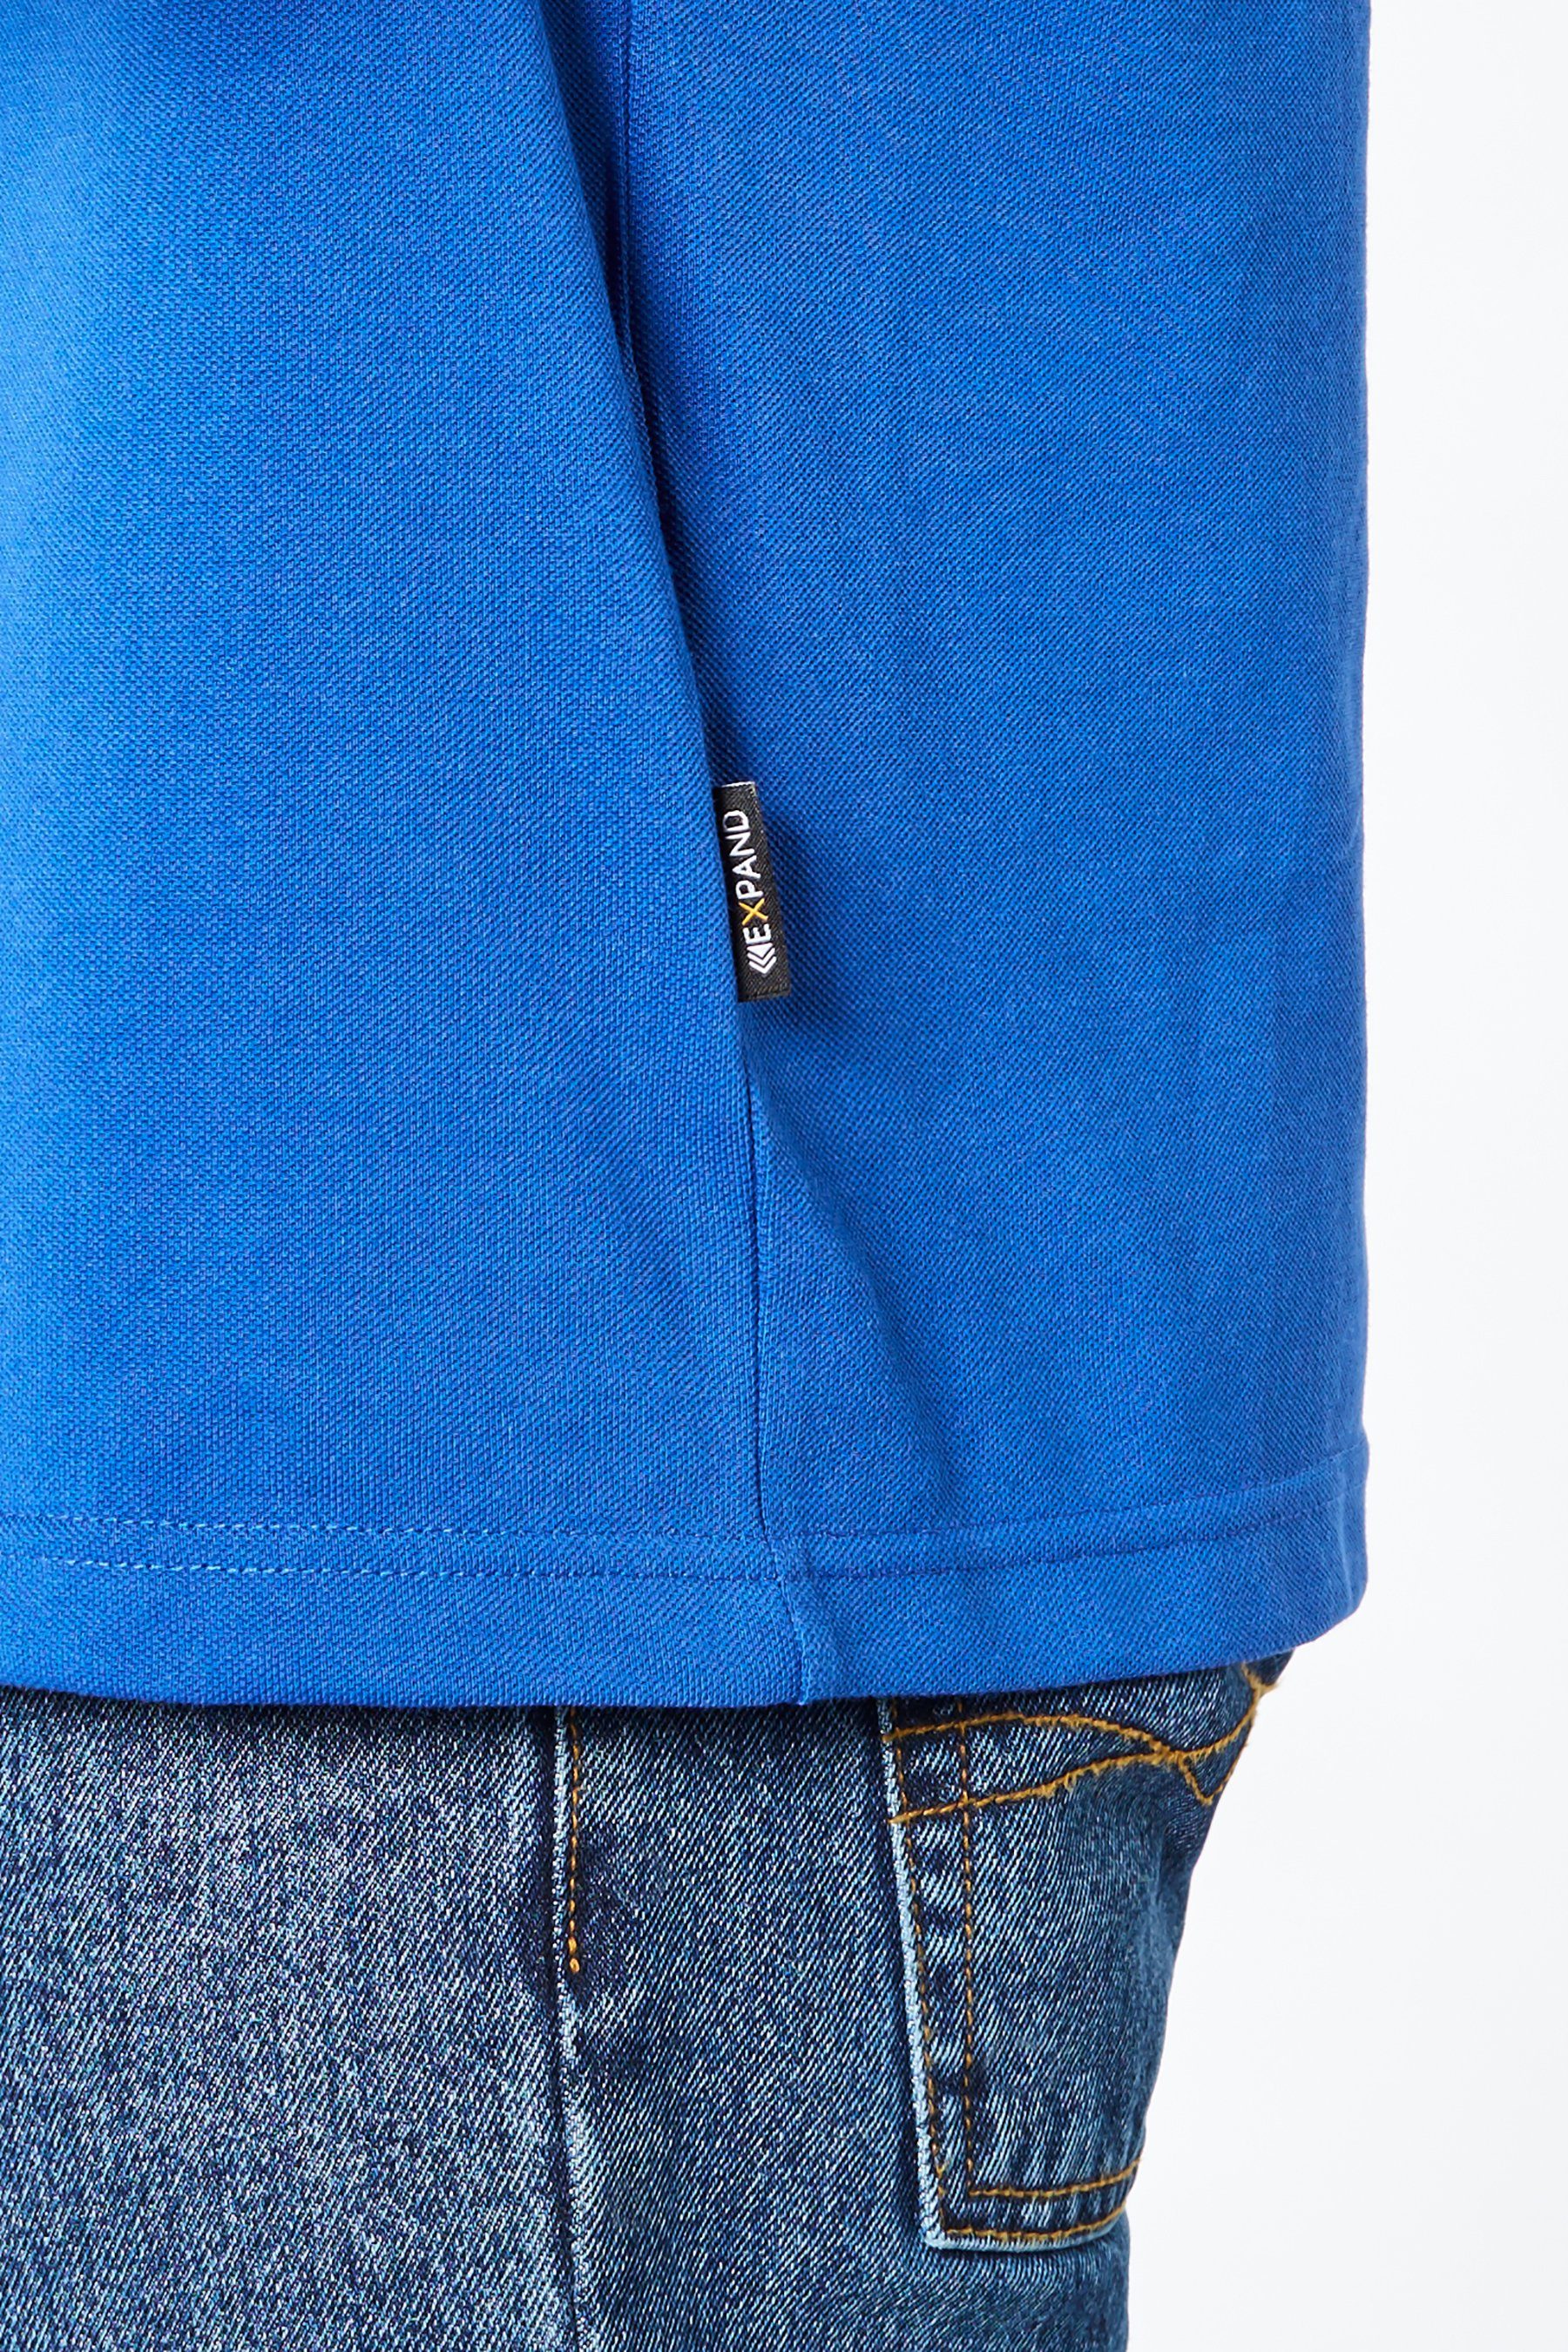 Expand Poloshirt strapazierfähig ultramarinblau